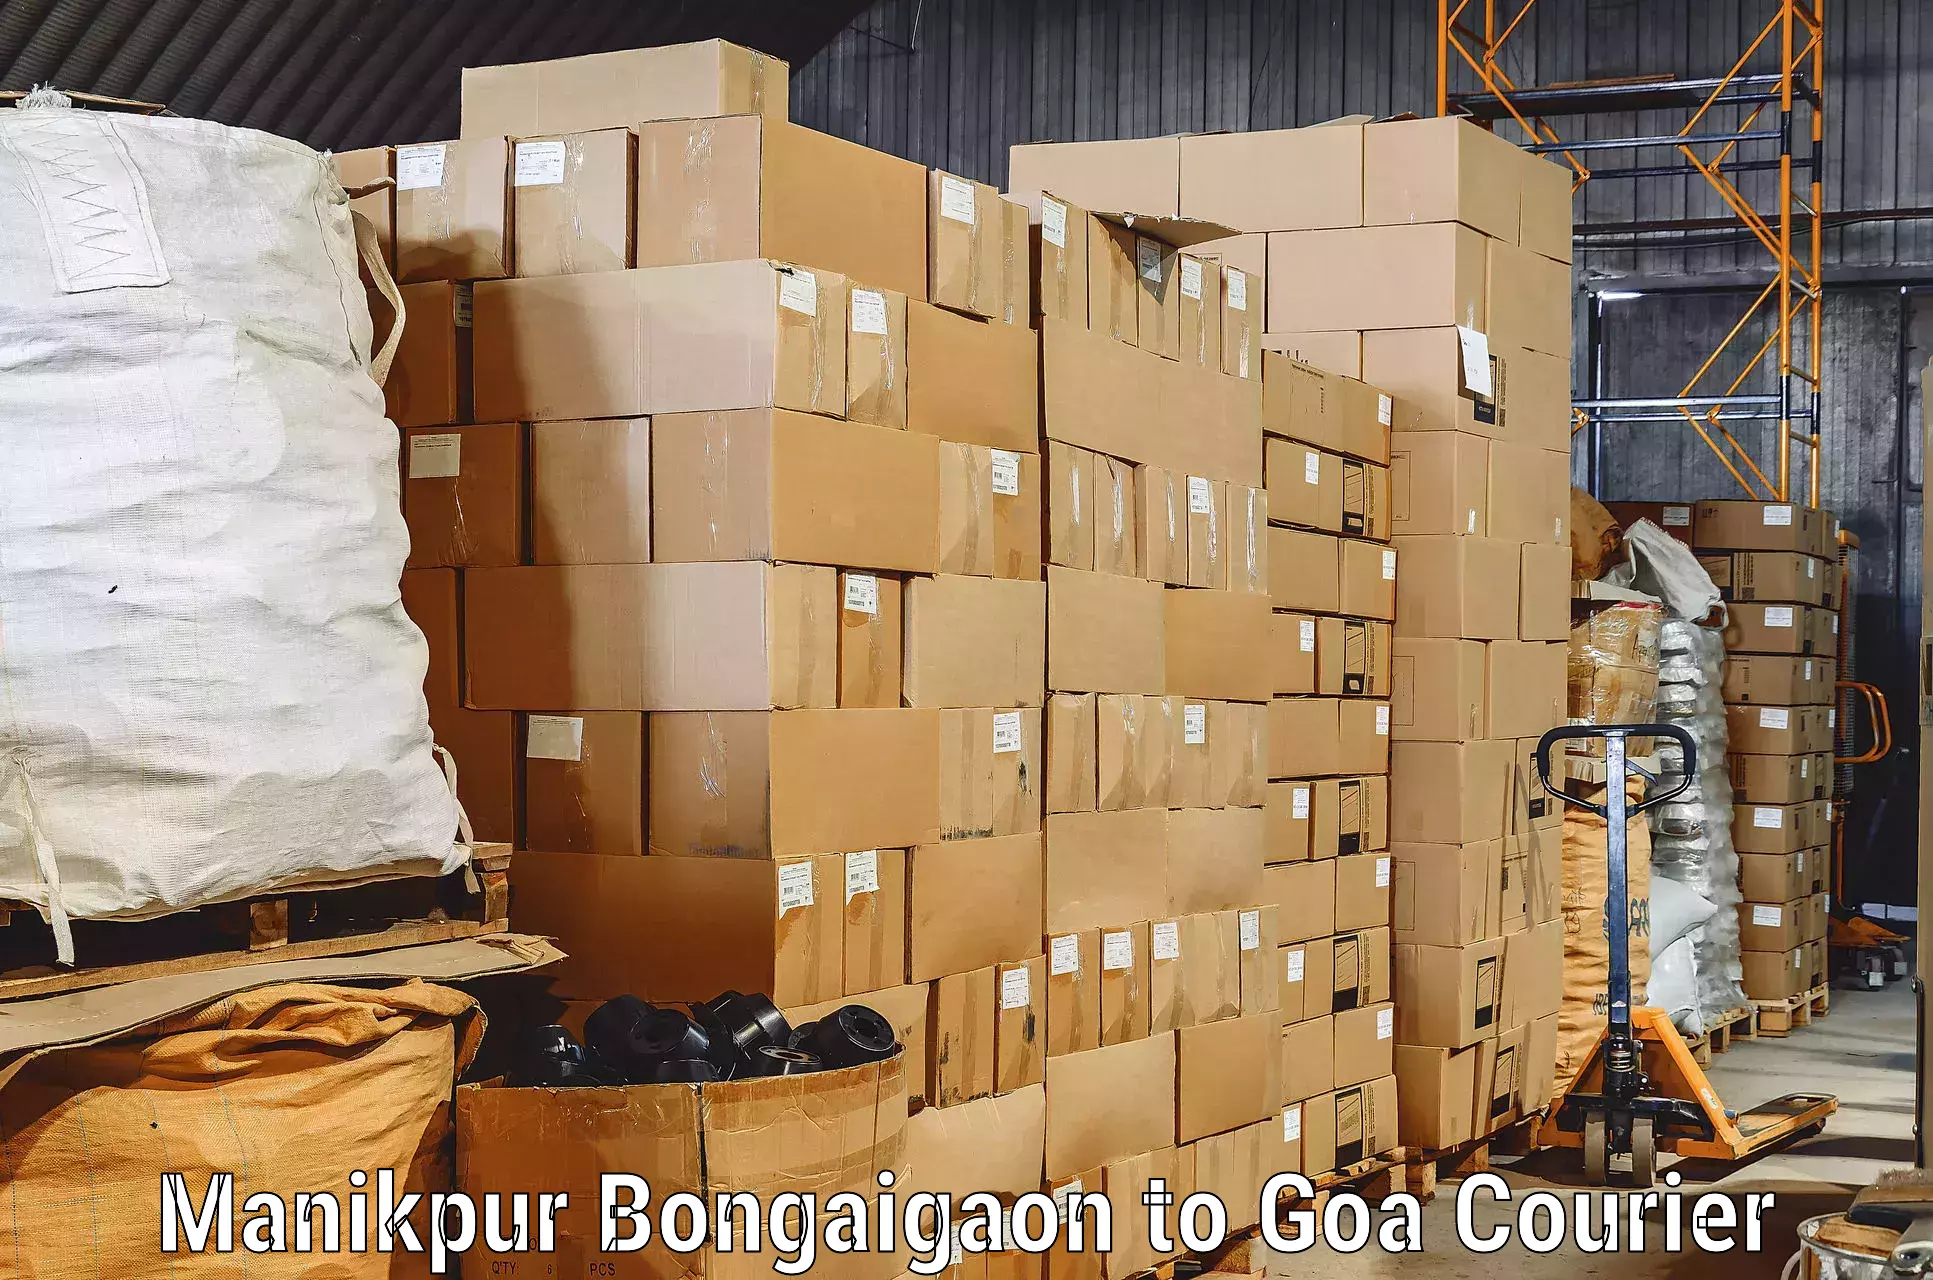 Moving and packing experts Manikpur Bongaigaon to Vasco da Gama